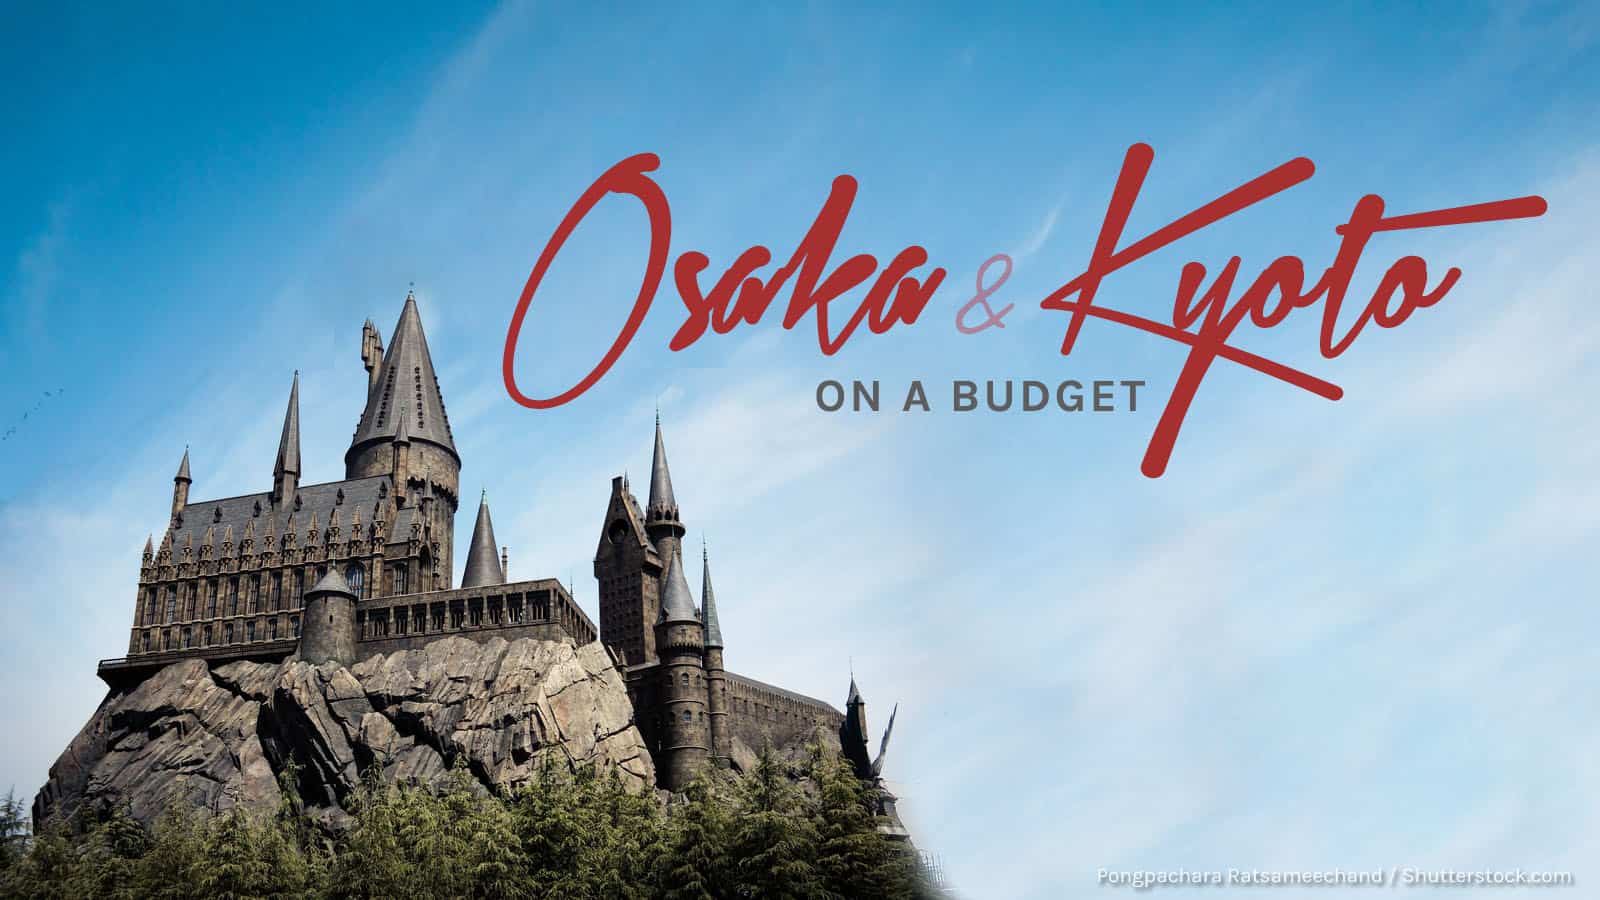 OSAKA AND KYOTO: Budget Travel Guide